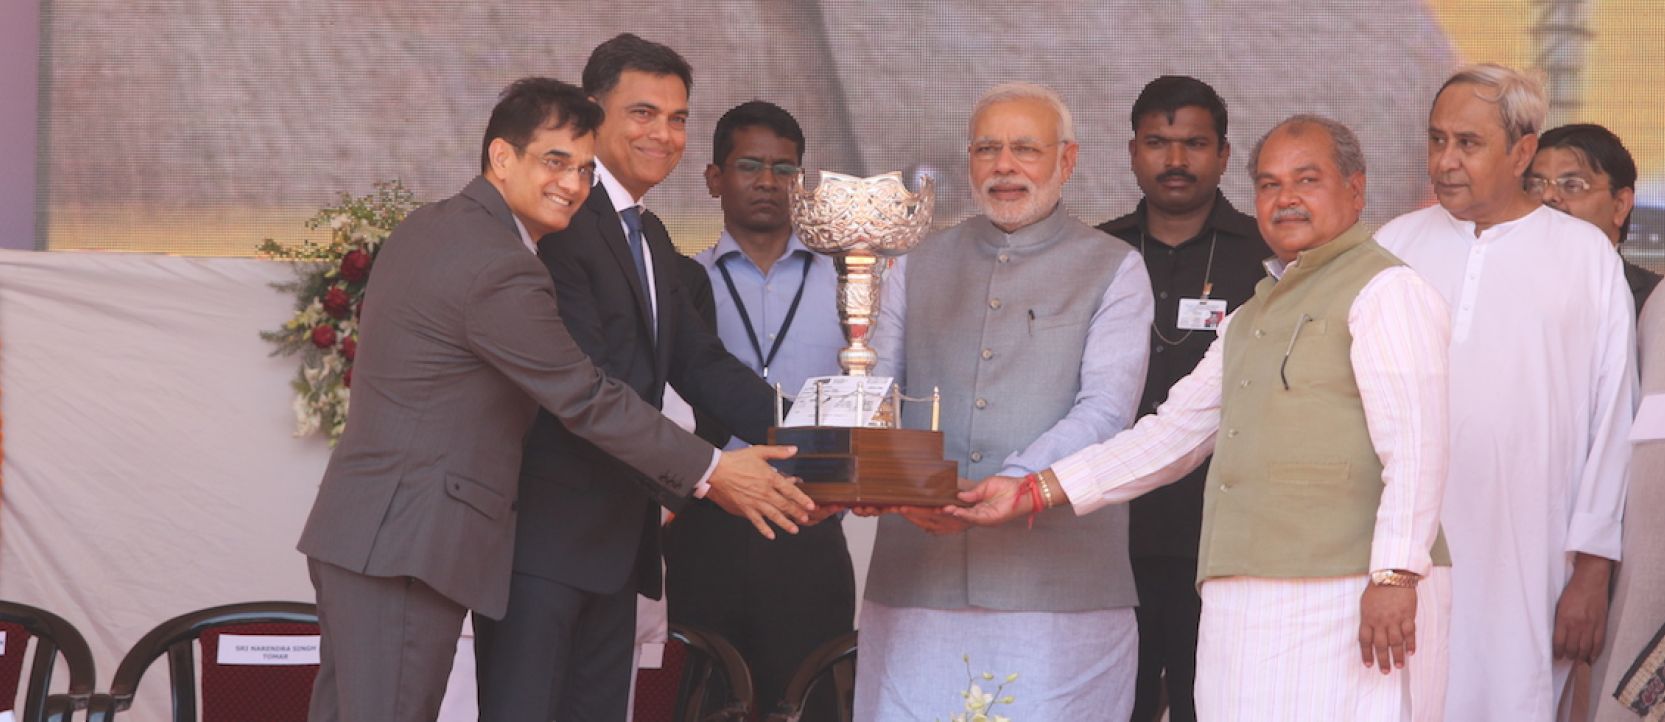 Prime Minister's Trophy